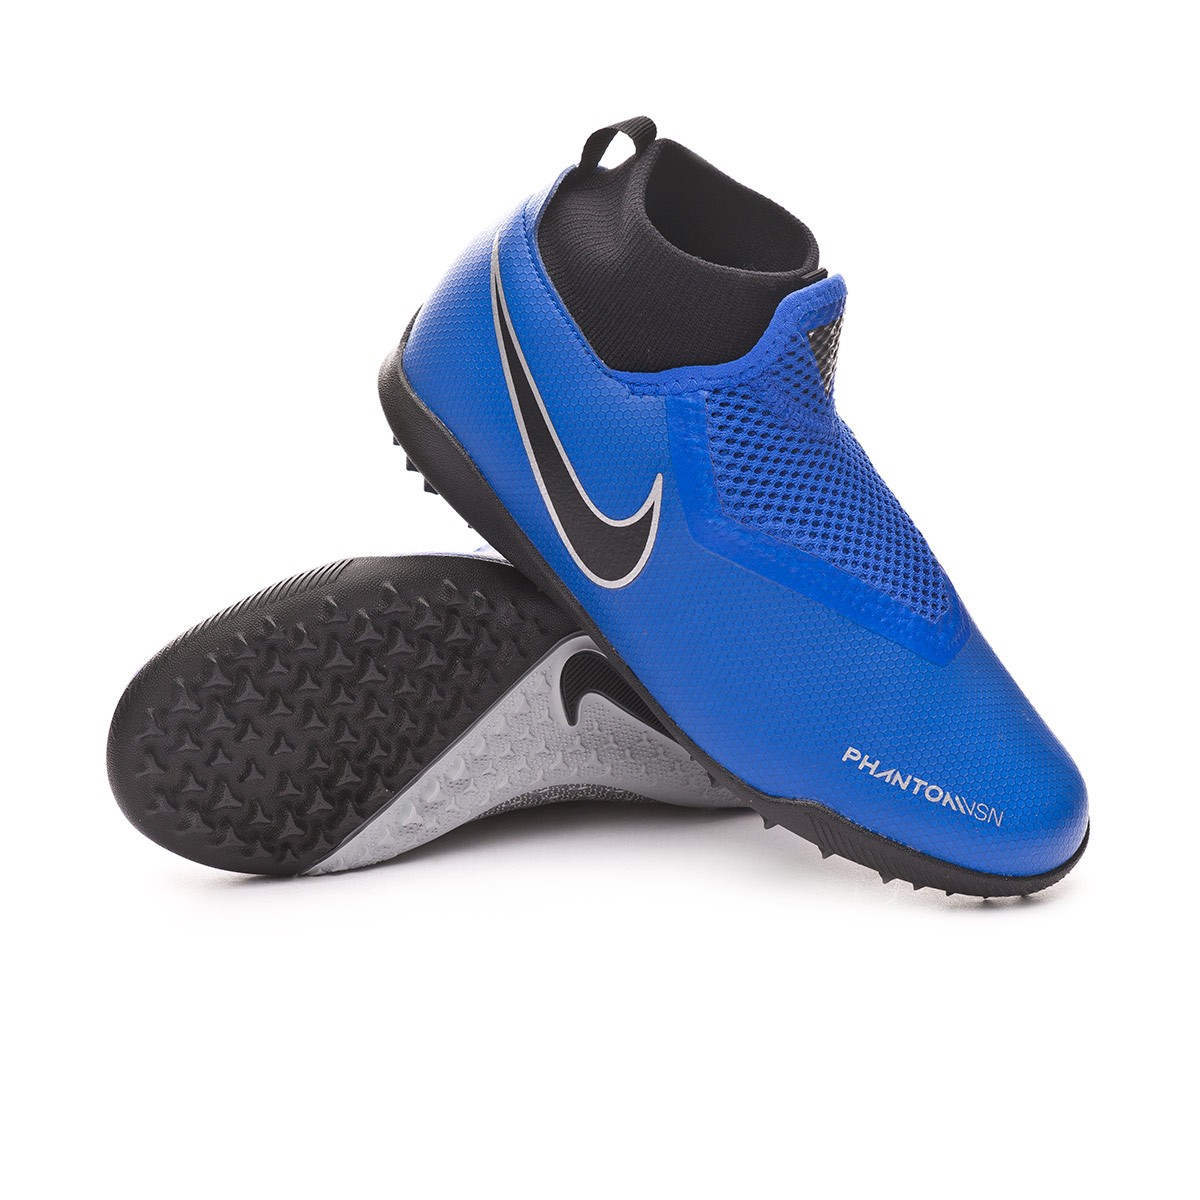 FAKE ! Next Gen Nike Phantom Vision 2 Boots Leaked